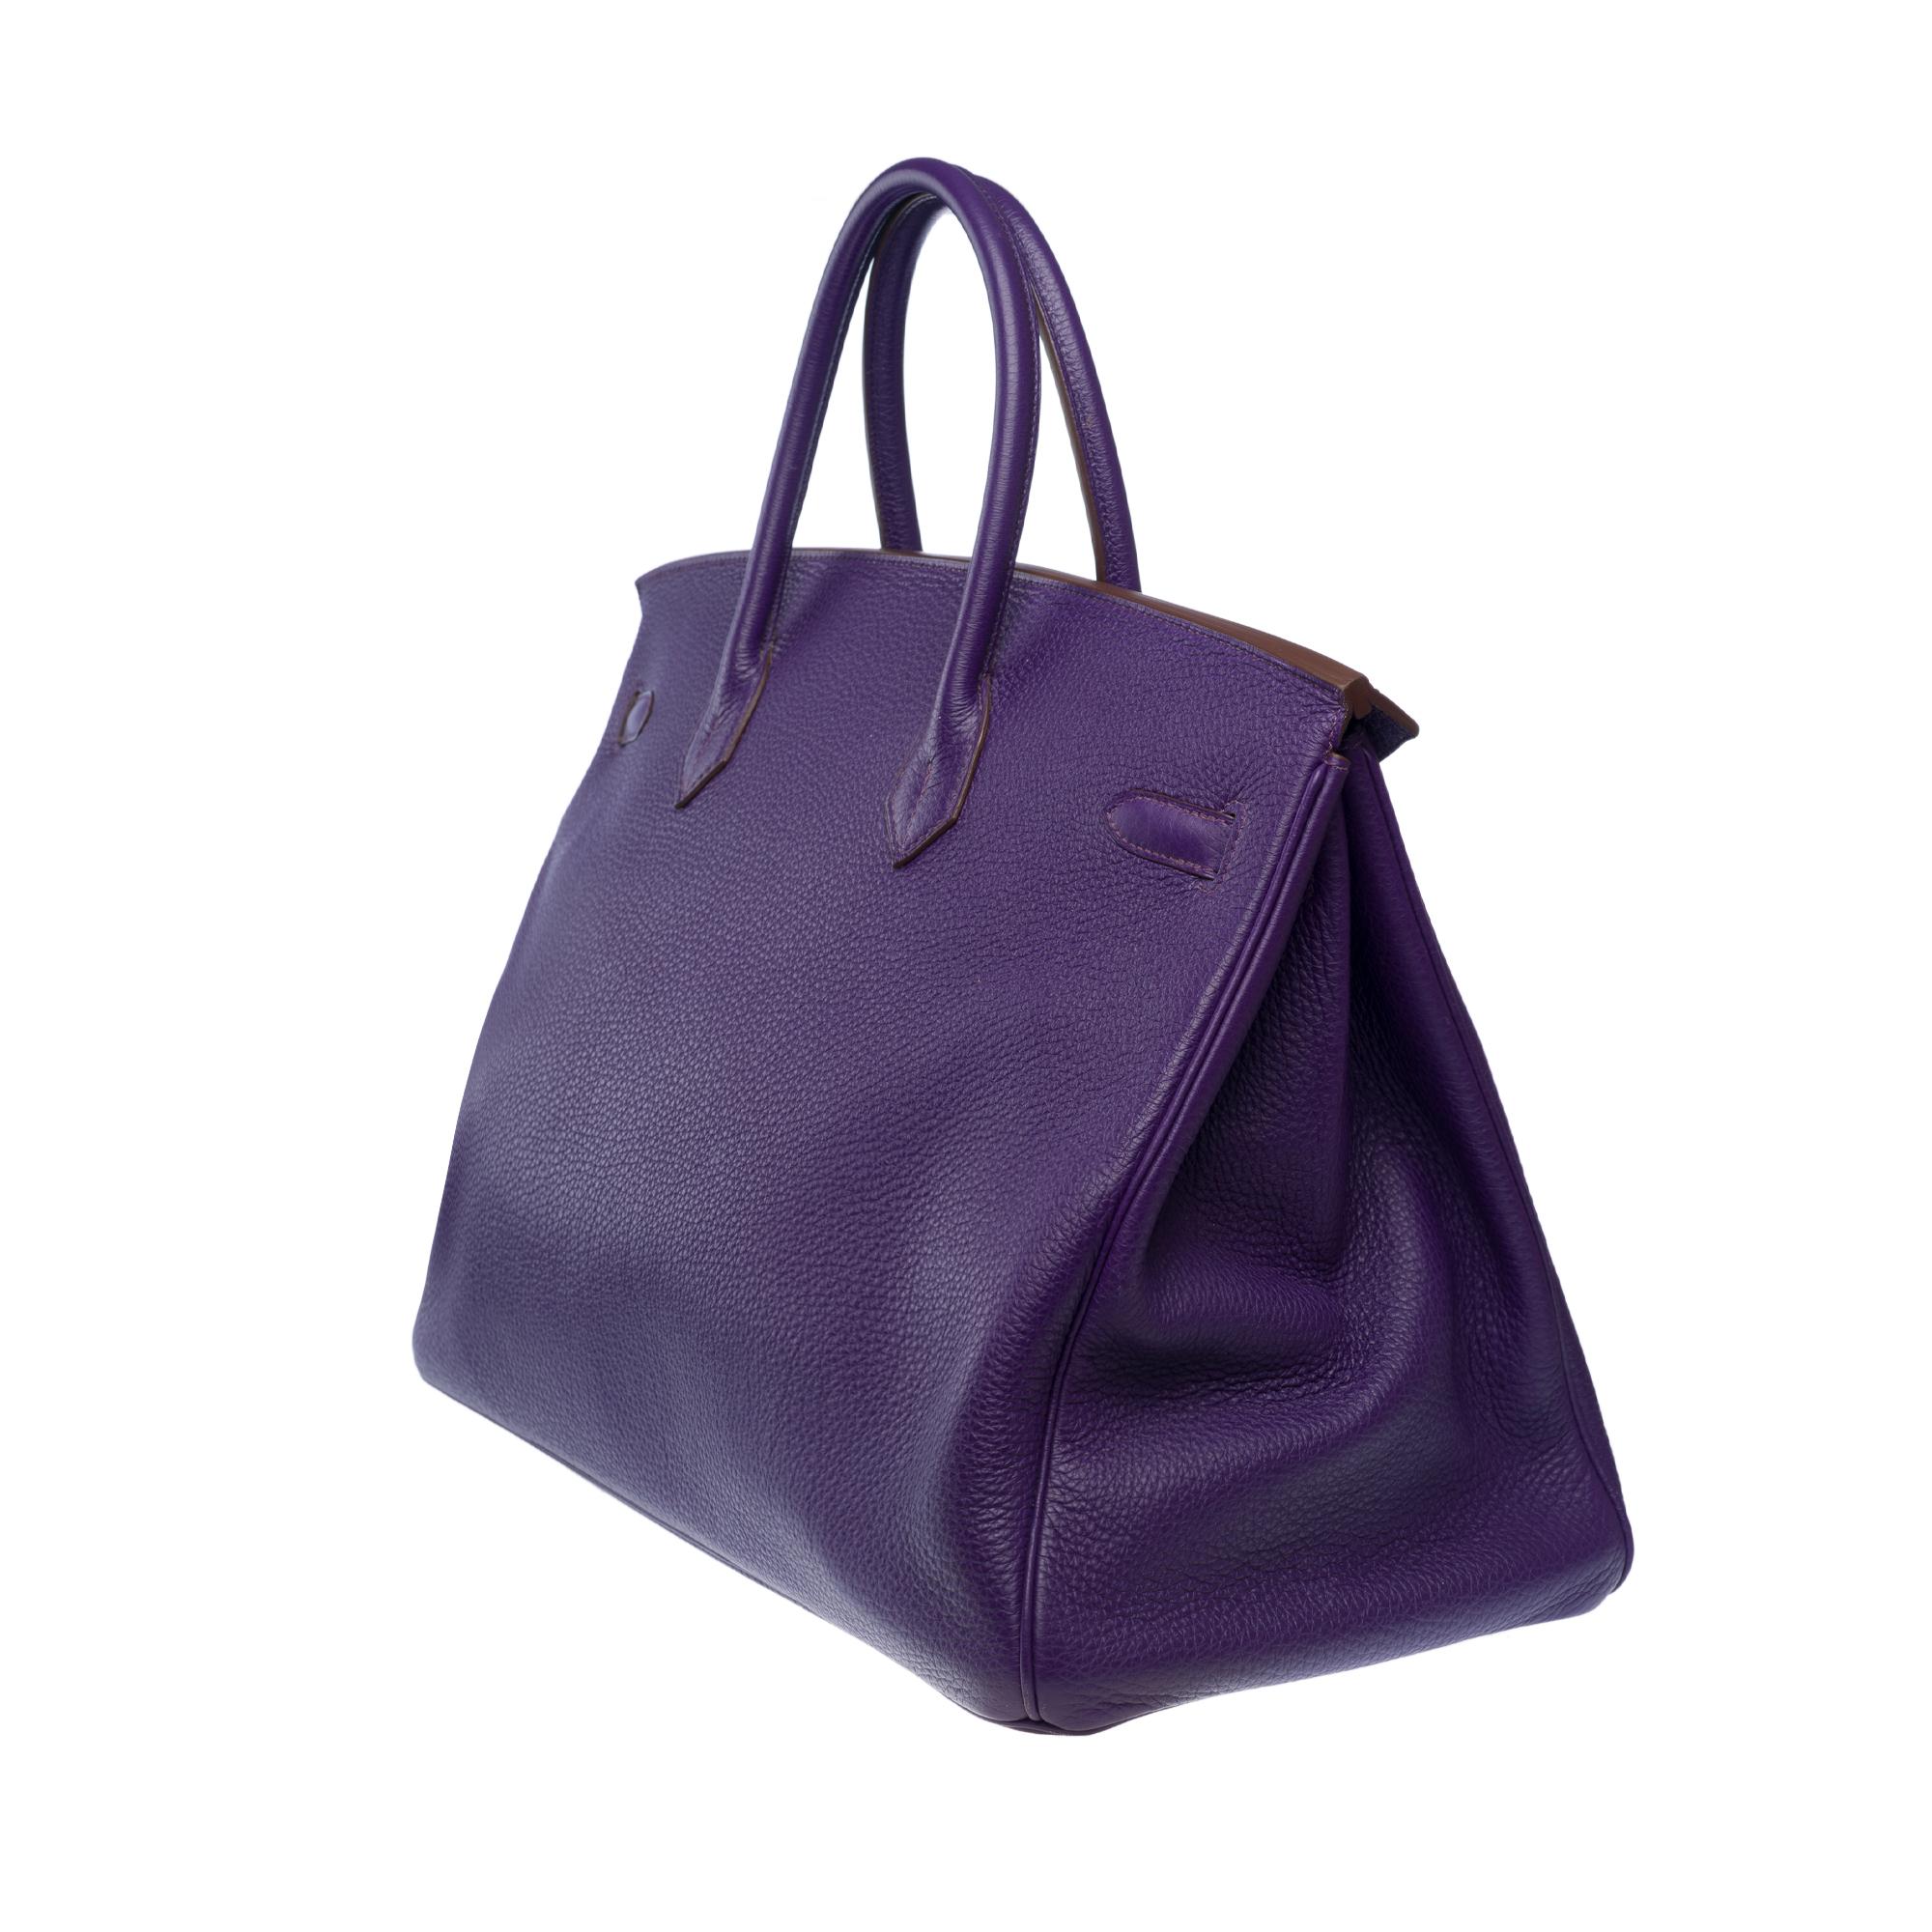 Classy & Rare Hermes Birkin 40 handbag in Iris Purple Togo leather, SHW 1